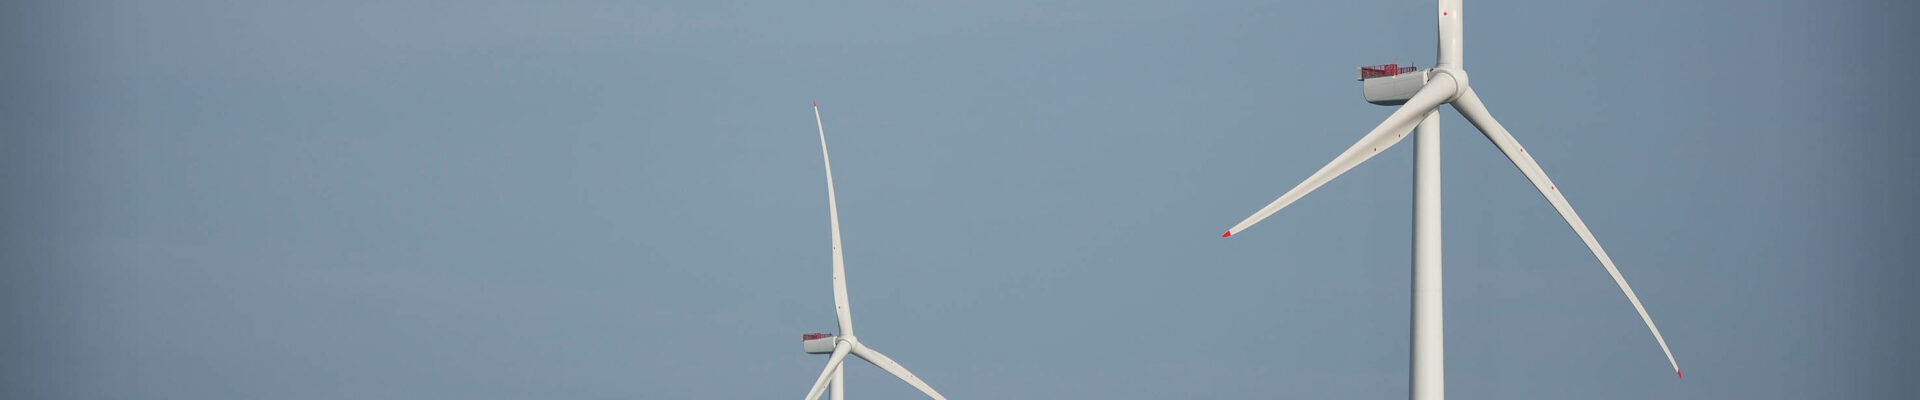 A photo of the Triton Knoll offshore wind farm